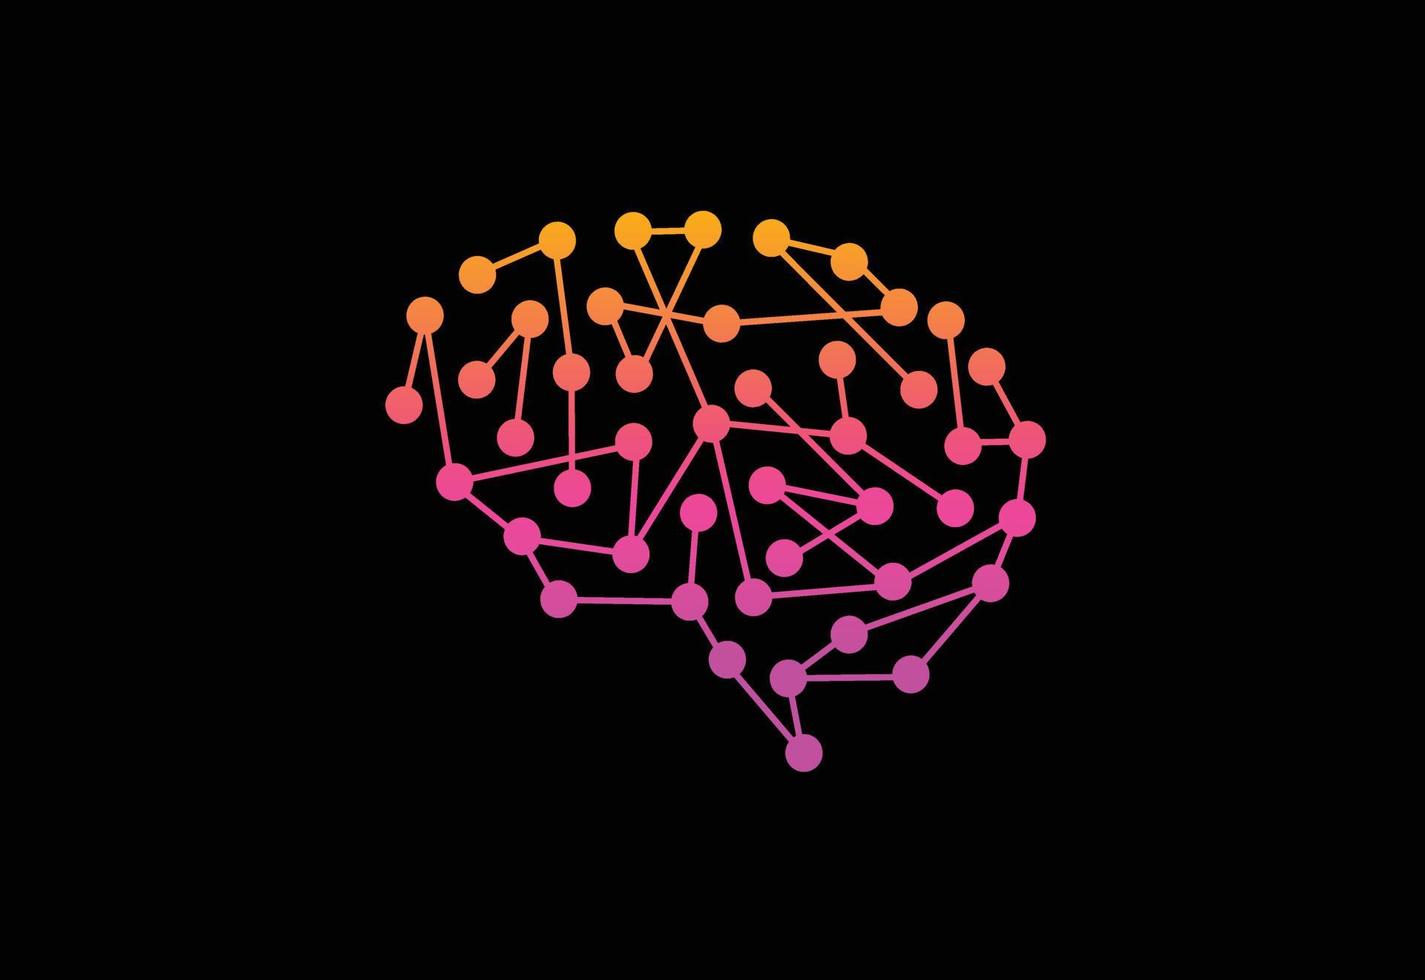 Modern and simple logo design for a brain, Brain logo icon sign symbol. vector